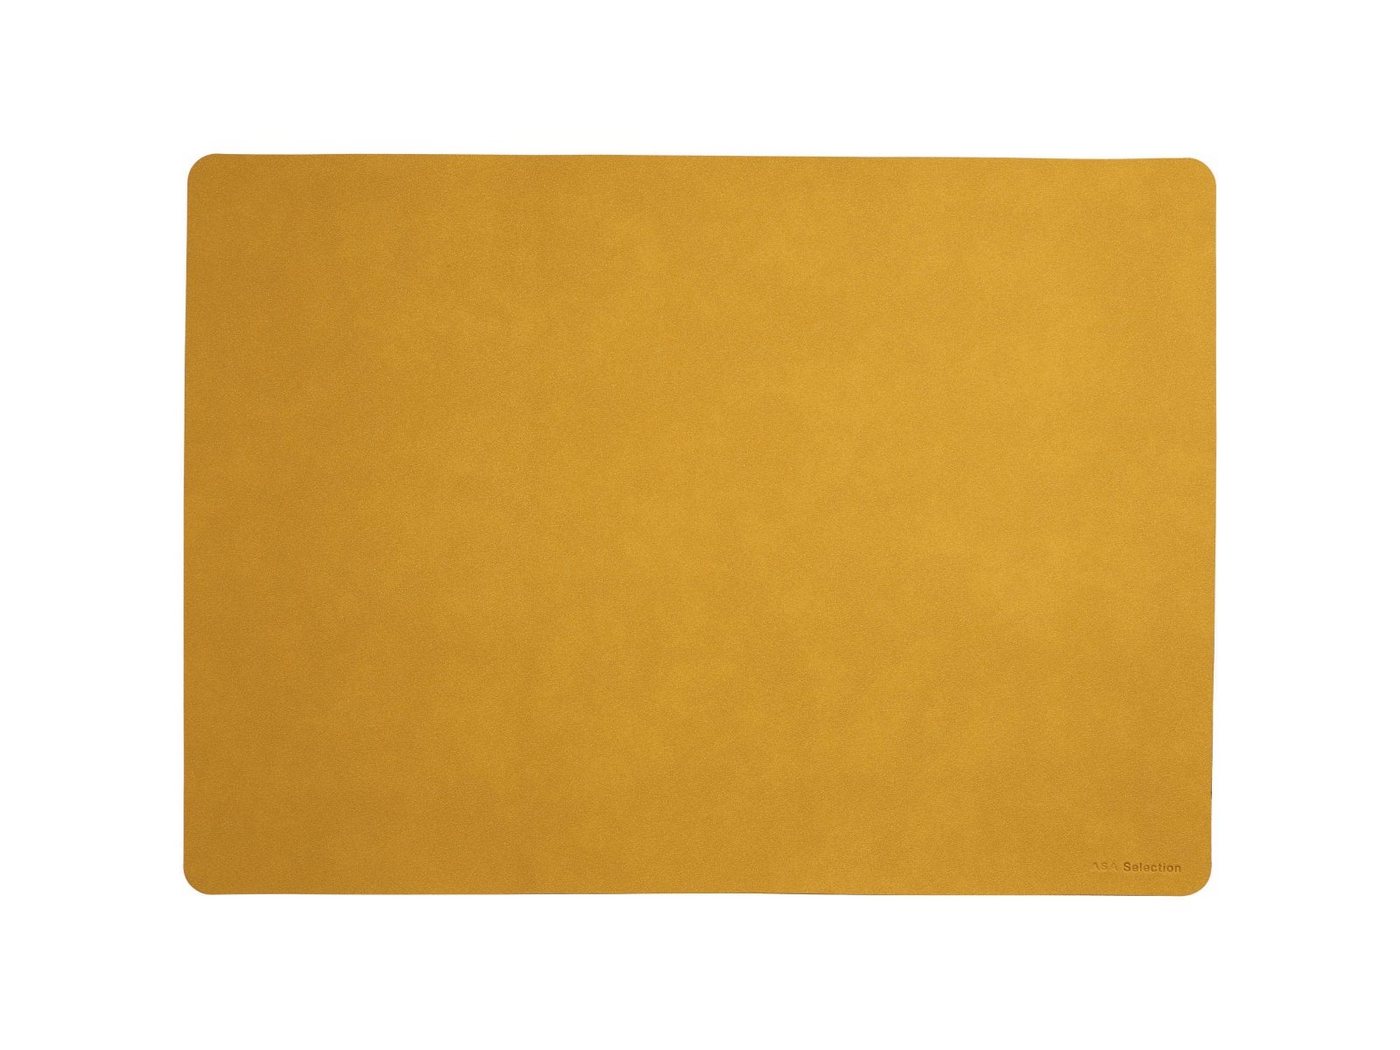 Platzset, Tischset soft leather amber 46 x 33 cm, ASA SELECTION von ASA SELECTION